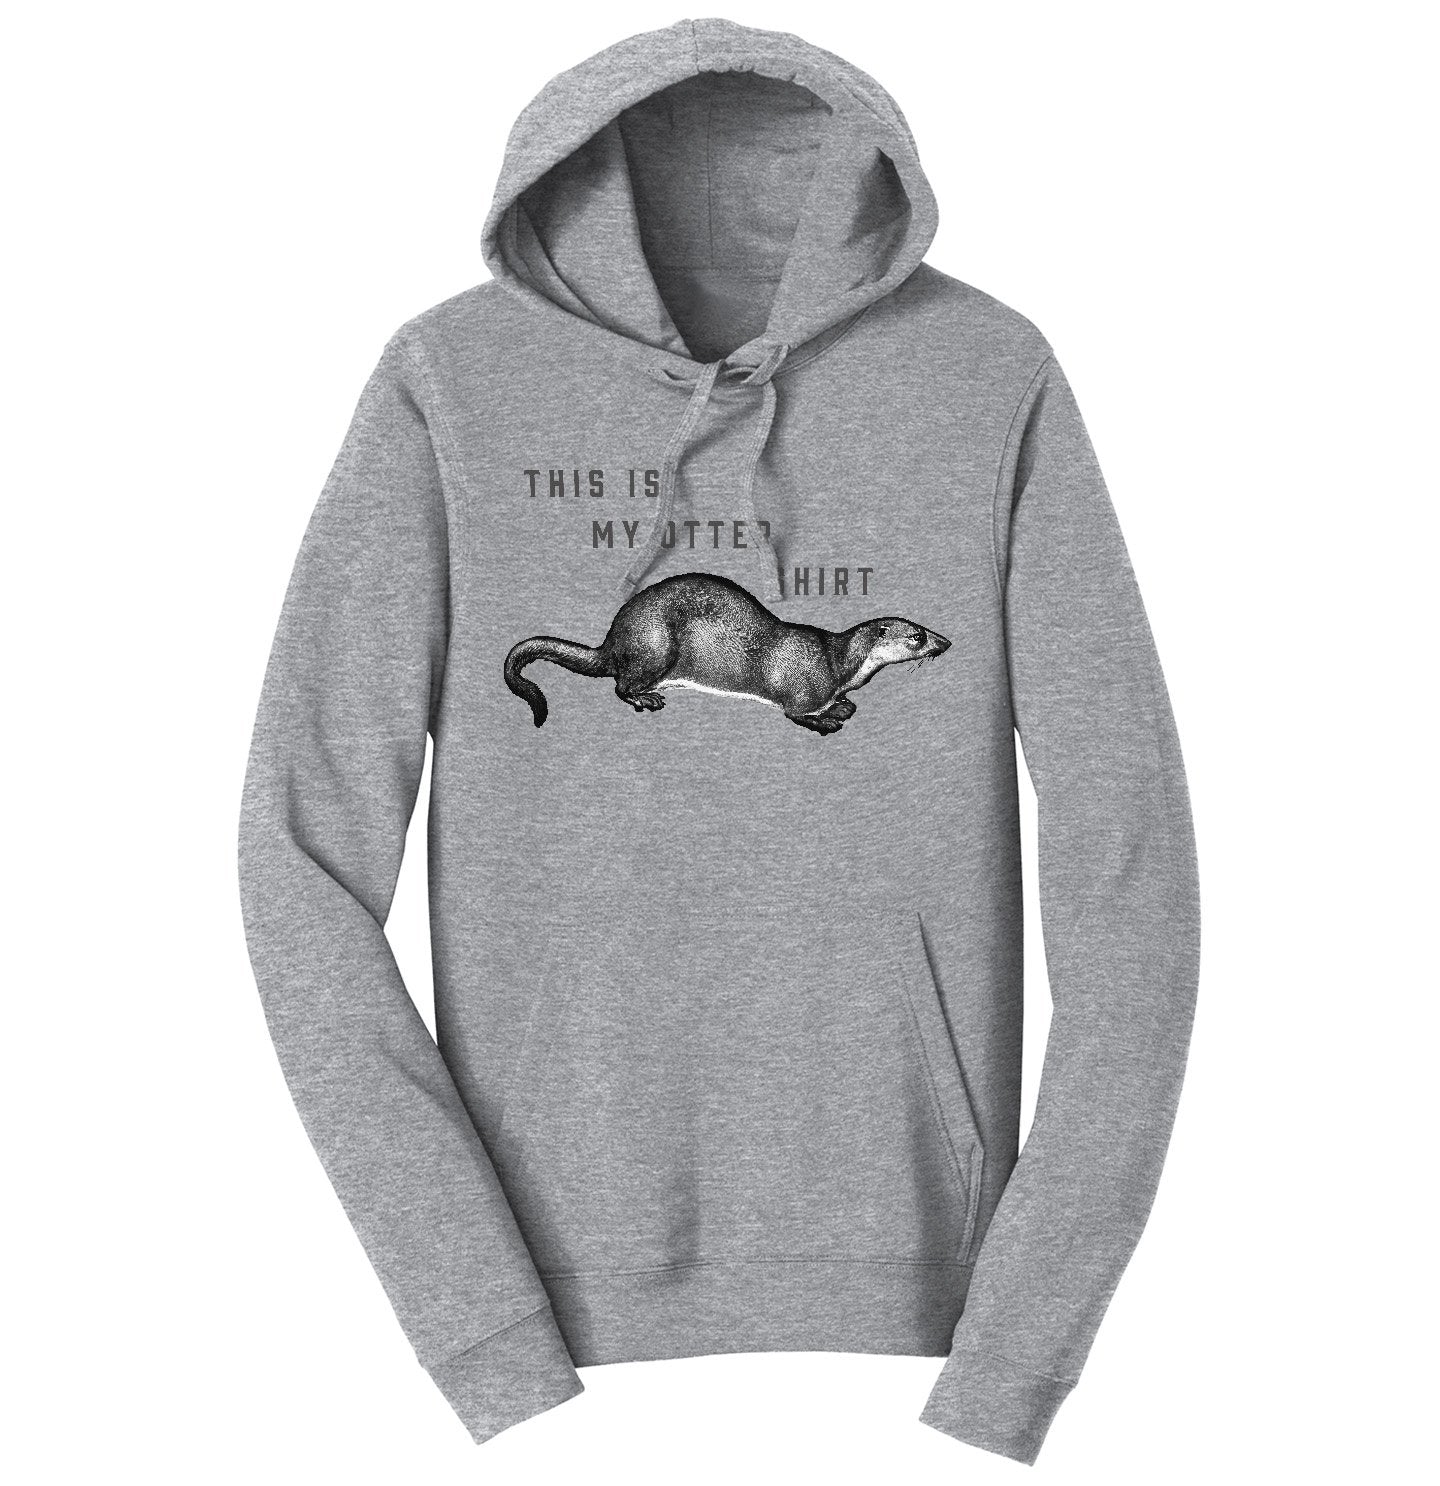 Animal Pride - My Otter Shirt - Adult Unisex Hoodie Sweatshirt